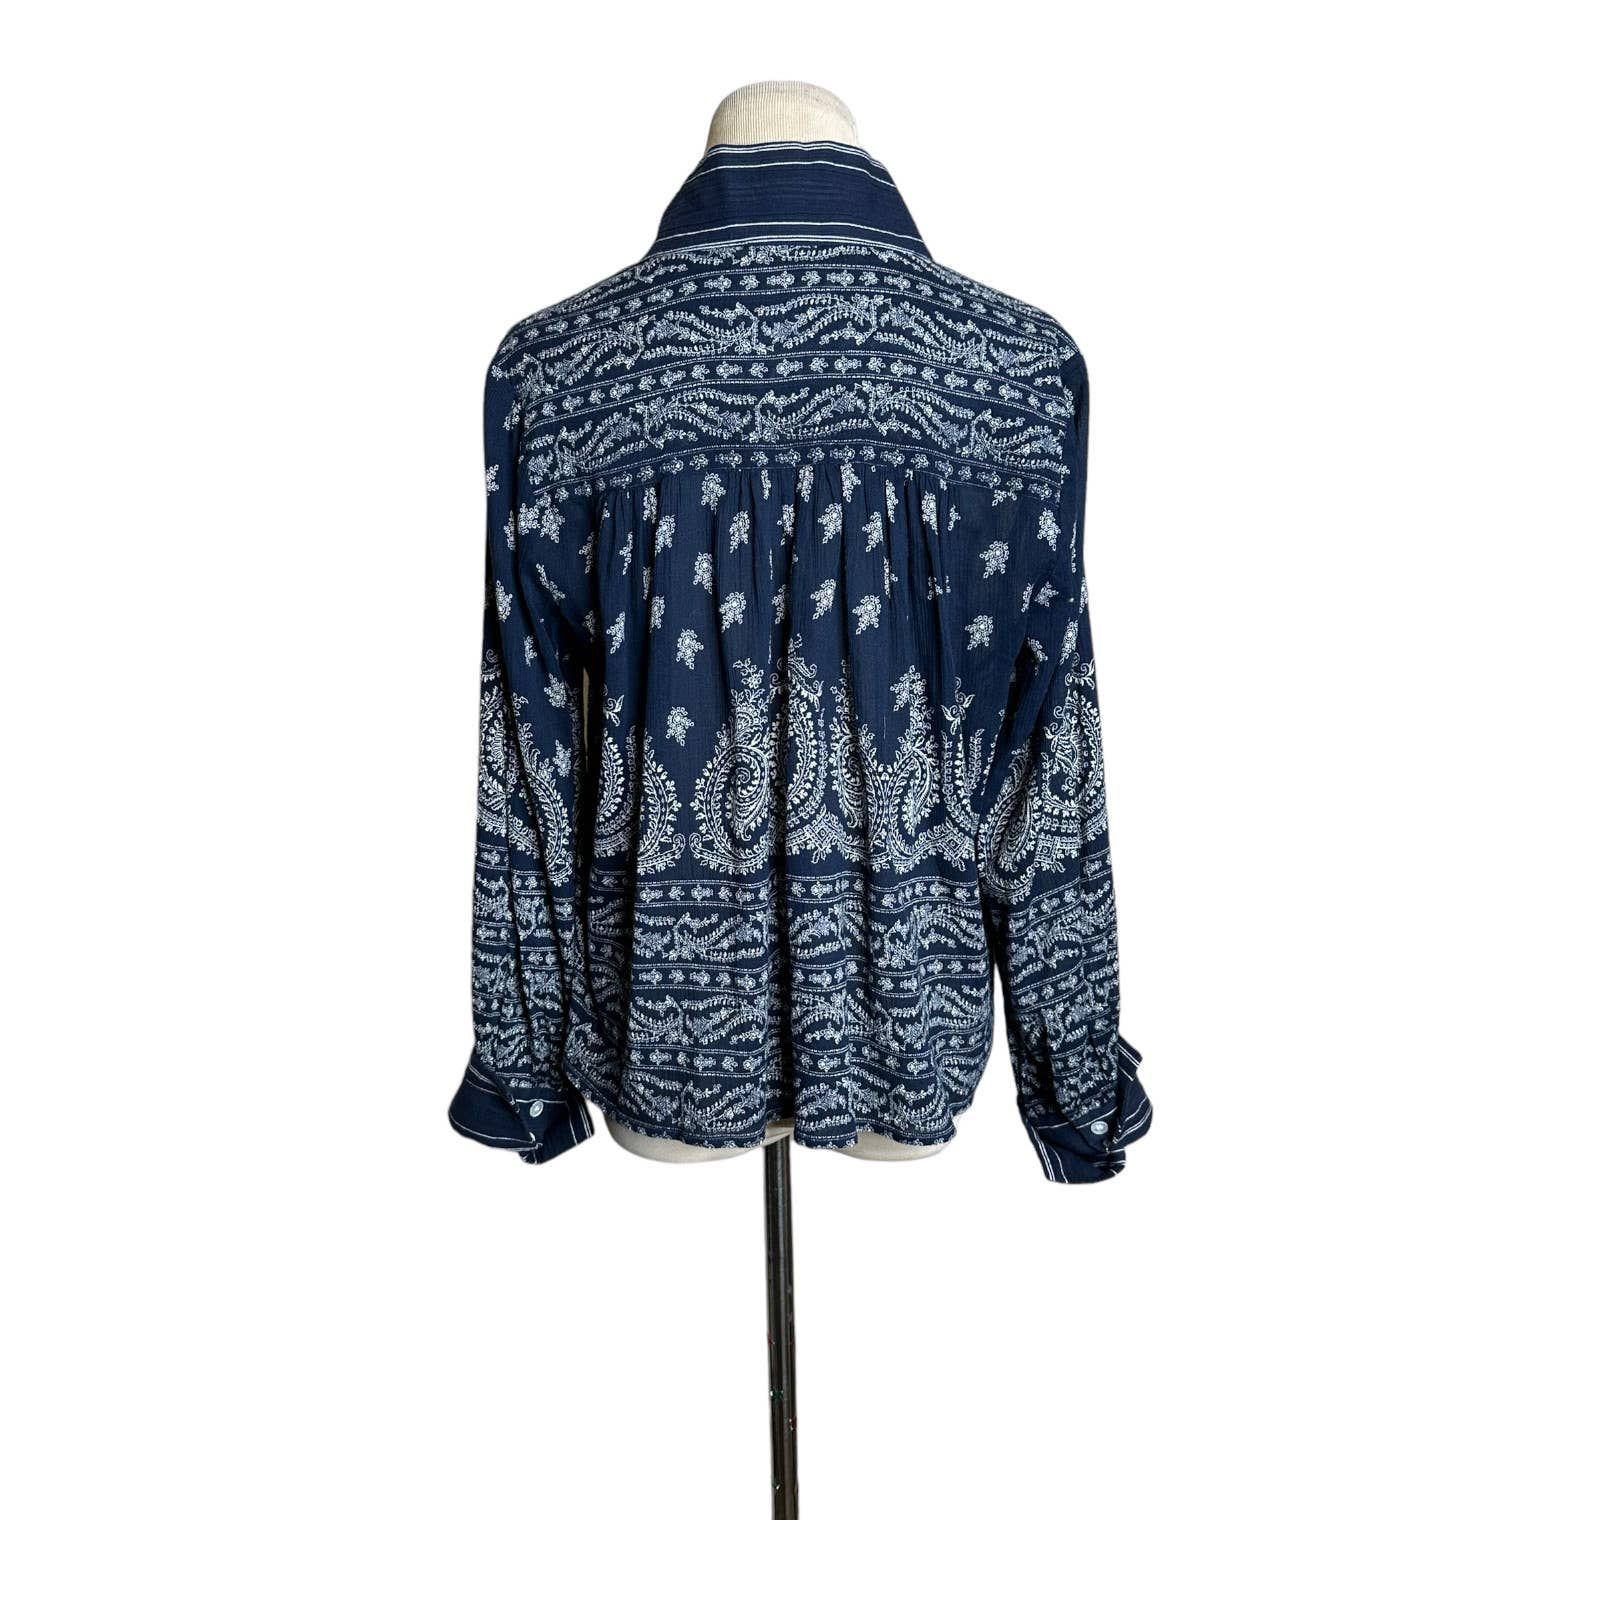 Sea New York Sea New York blue paisley print long sleeves blouse size 2 Size XS / US 0-2 / IT 36-38 - 9 Thumbnail